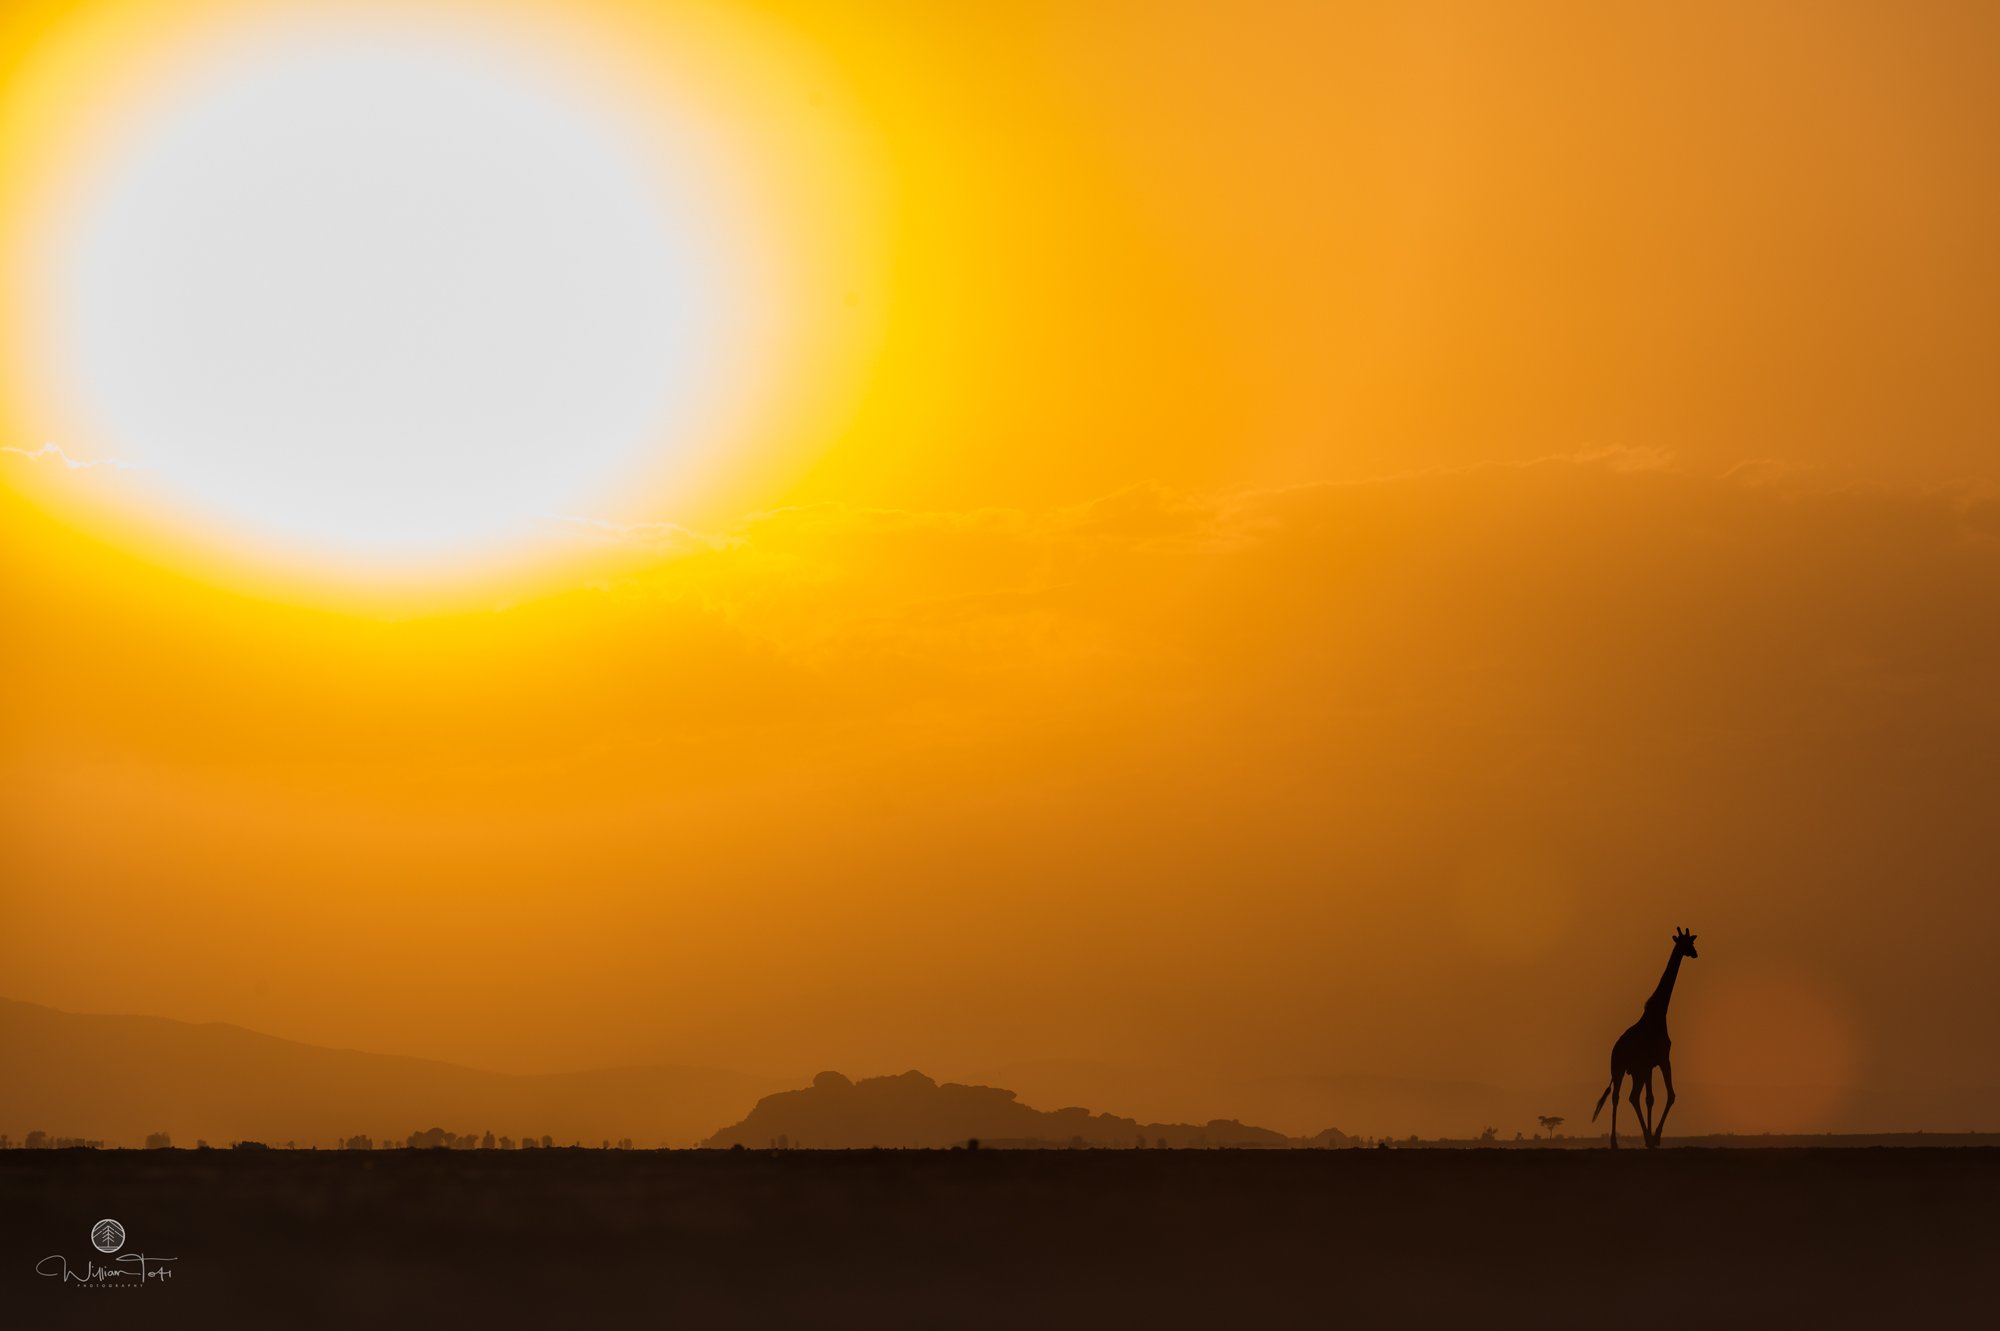 Giraffe in Silhouette at sunset - William Toti.jpg